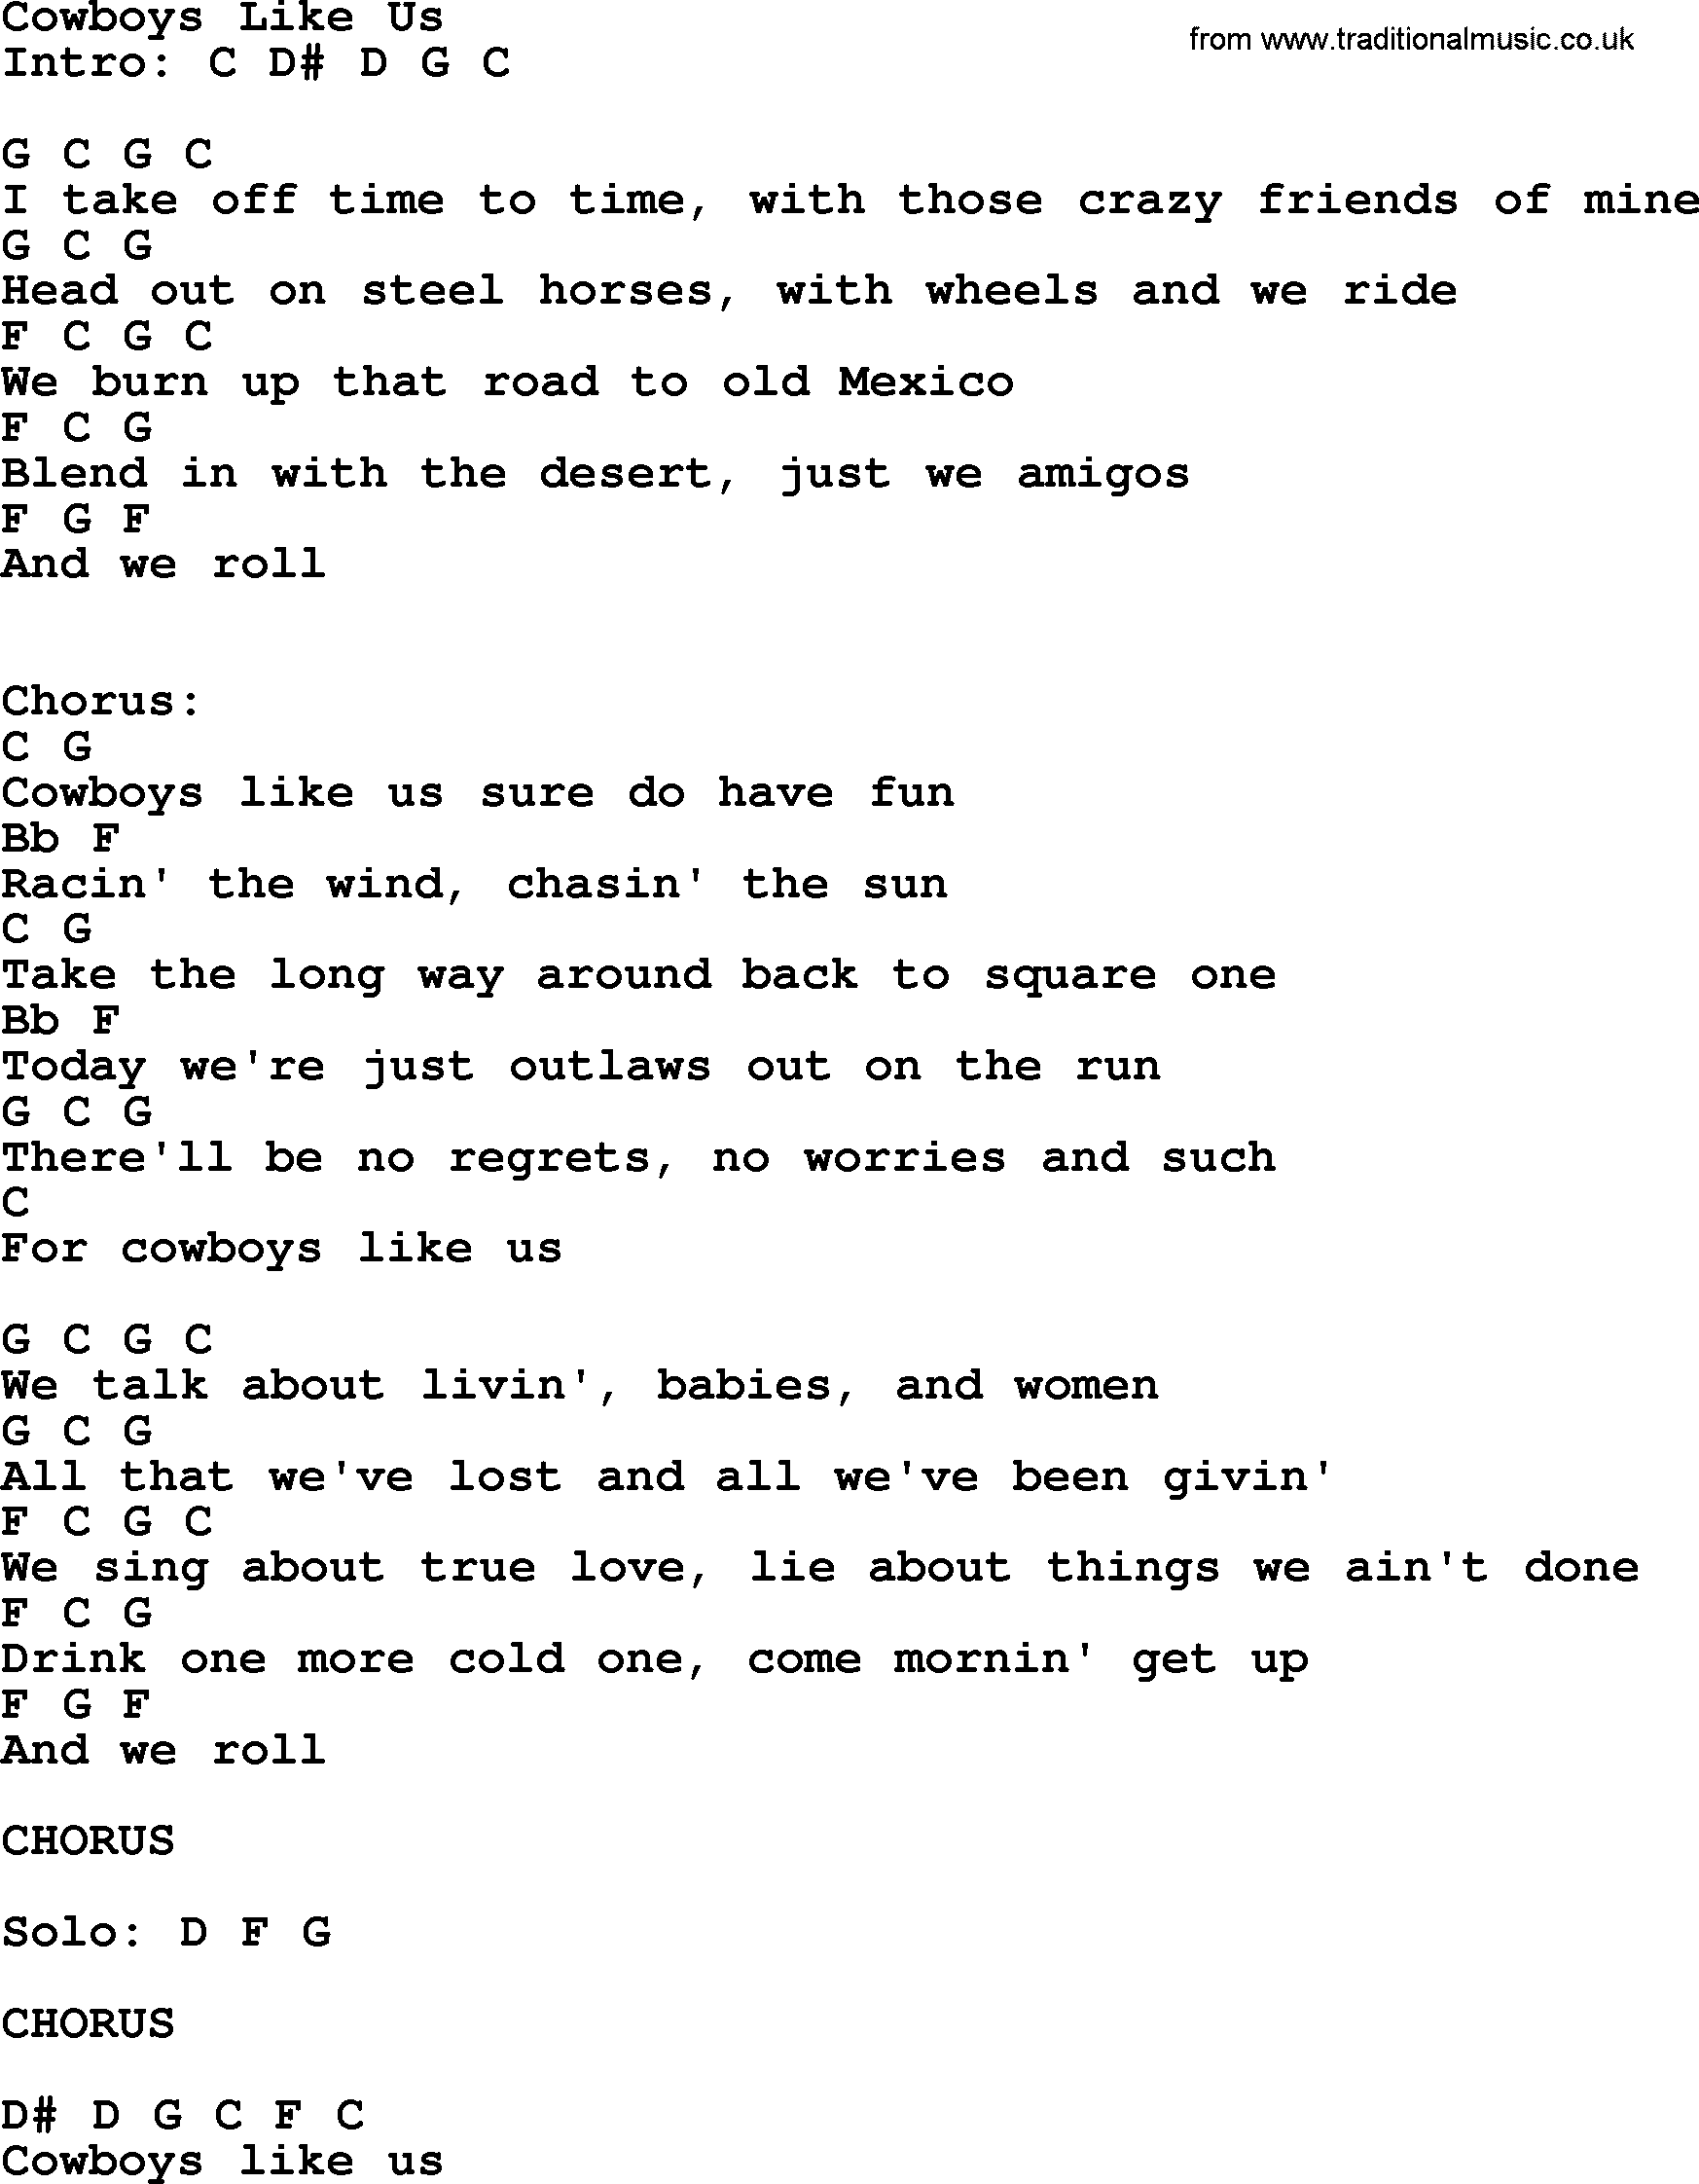 George Strait song: Cowboys Like Us, lyrics and chords